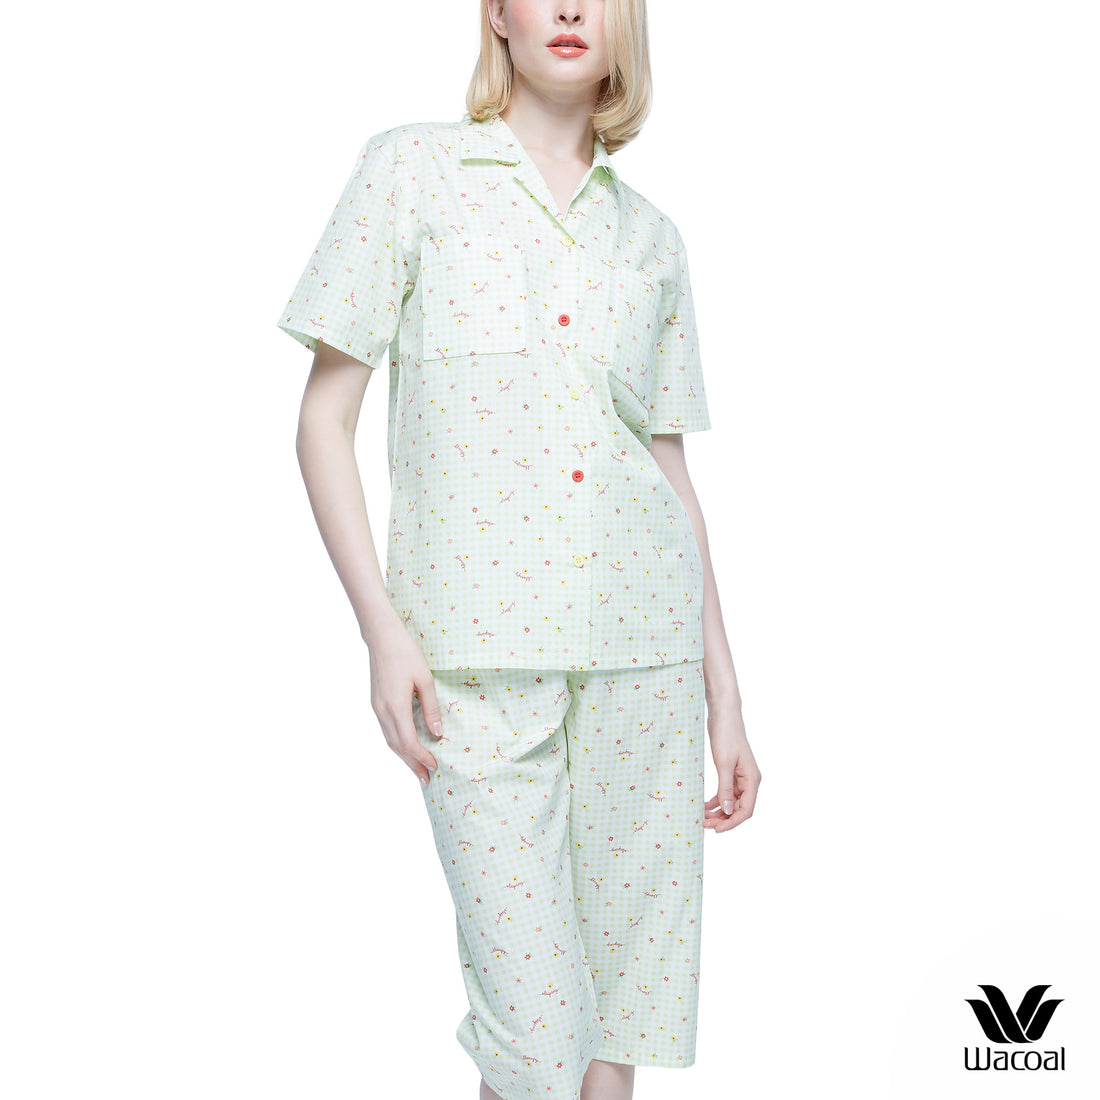 Wacoal Sleepwear ชุดนอนกันโป๊ พิมพ์ลายน่ารัก รุ่น WN9E02 สีเขียว (GR)